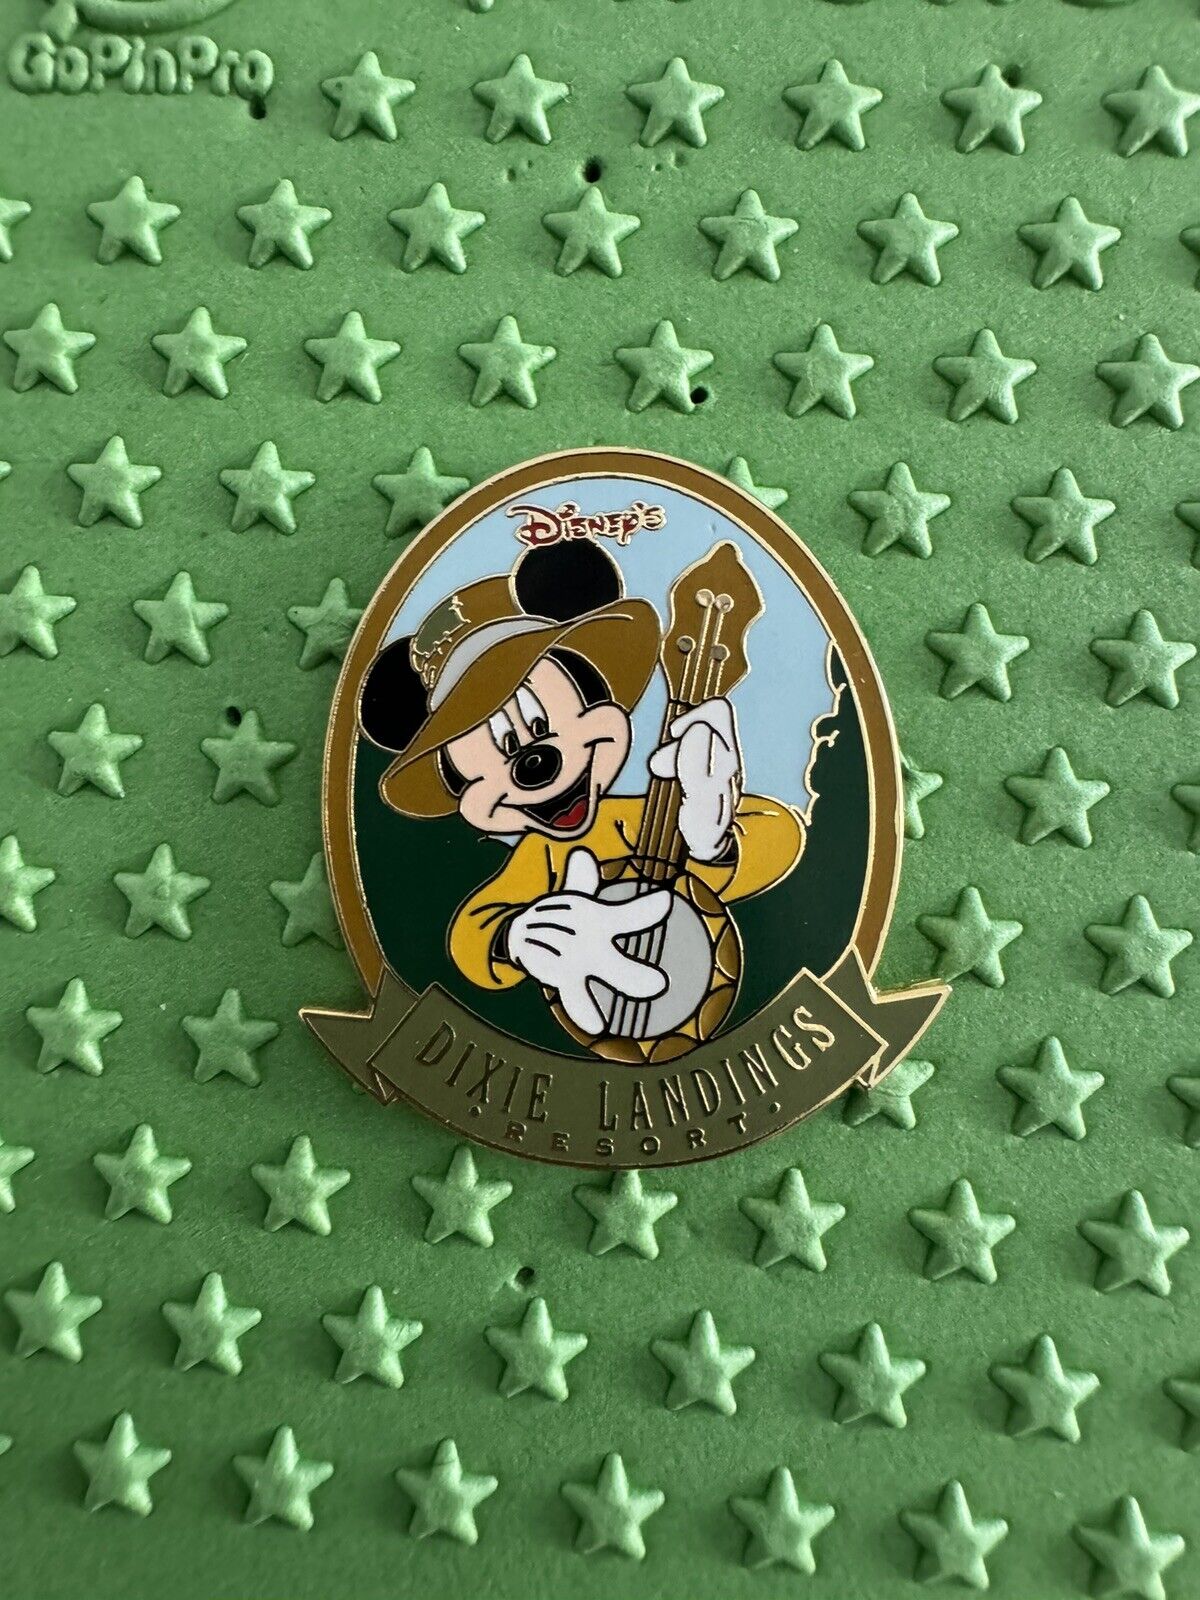 Mickey Mouse Banjo Disney's Dixie Landings Resort 2000 Pin #87